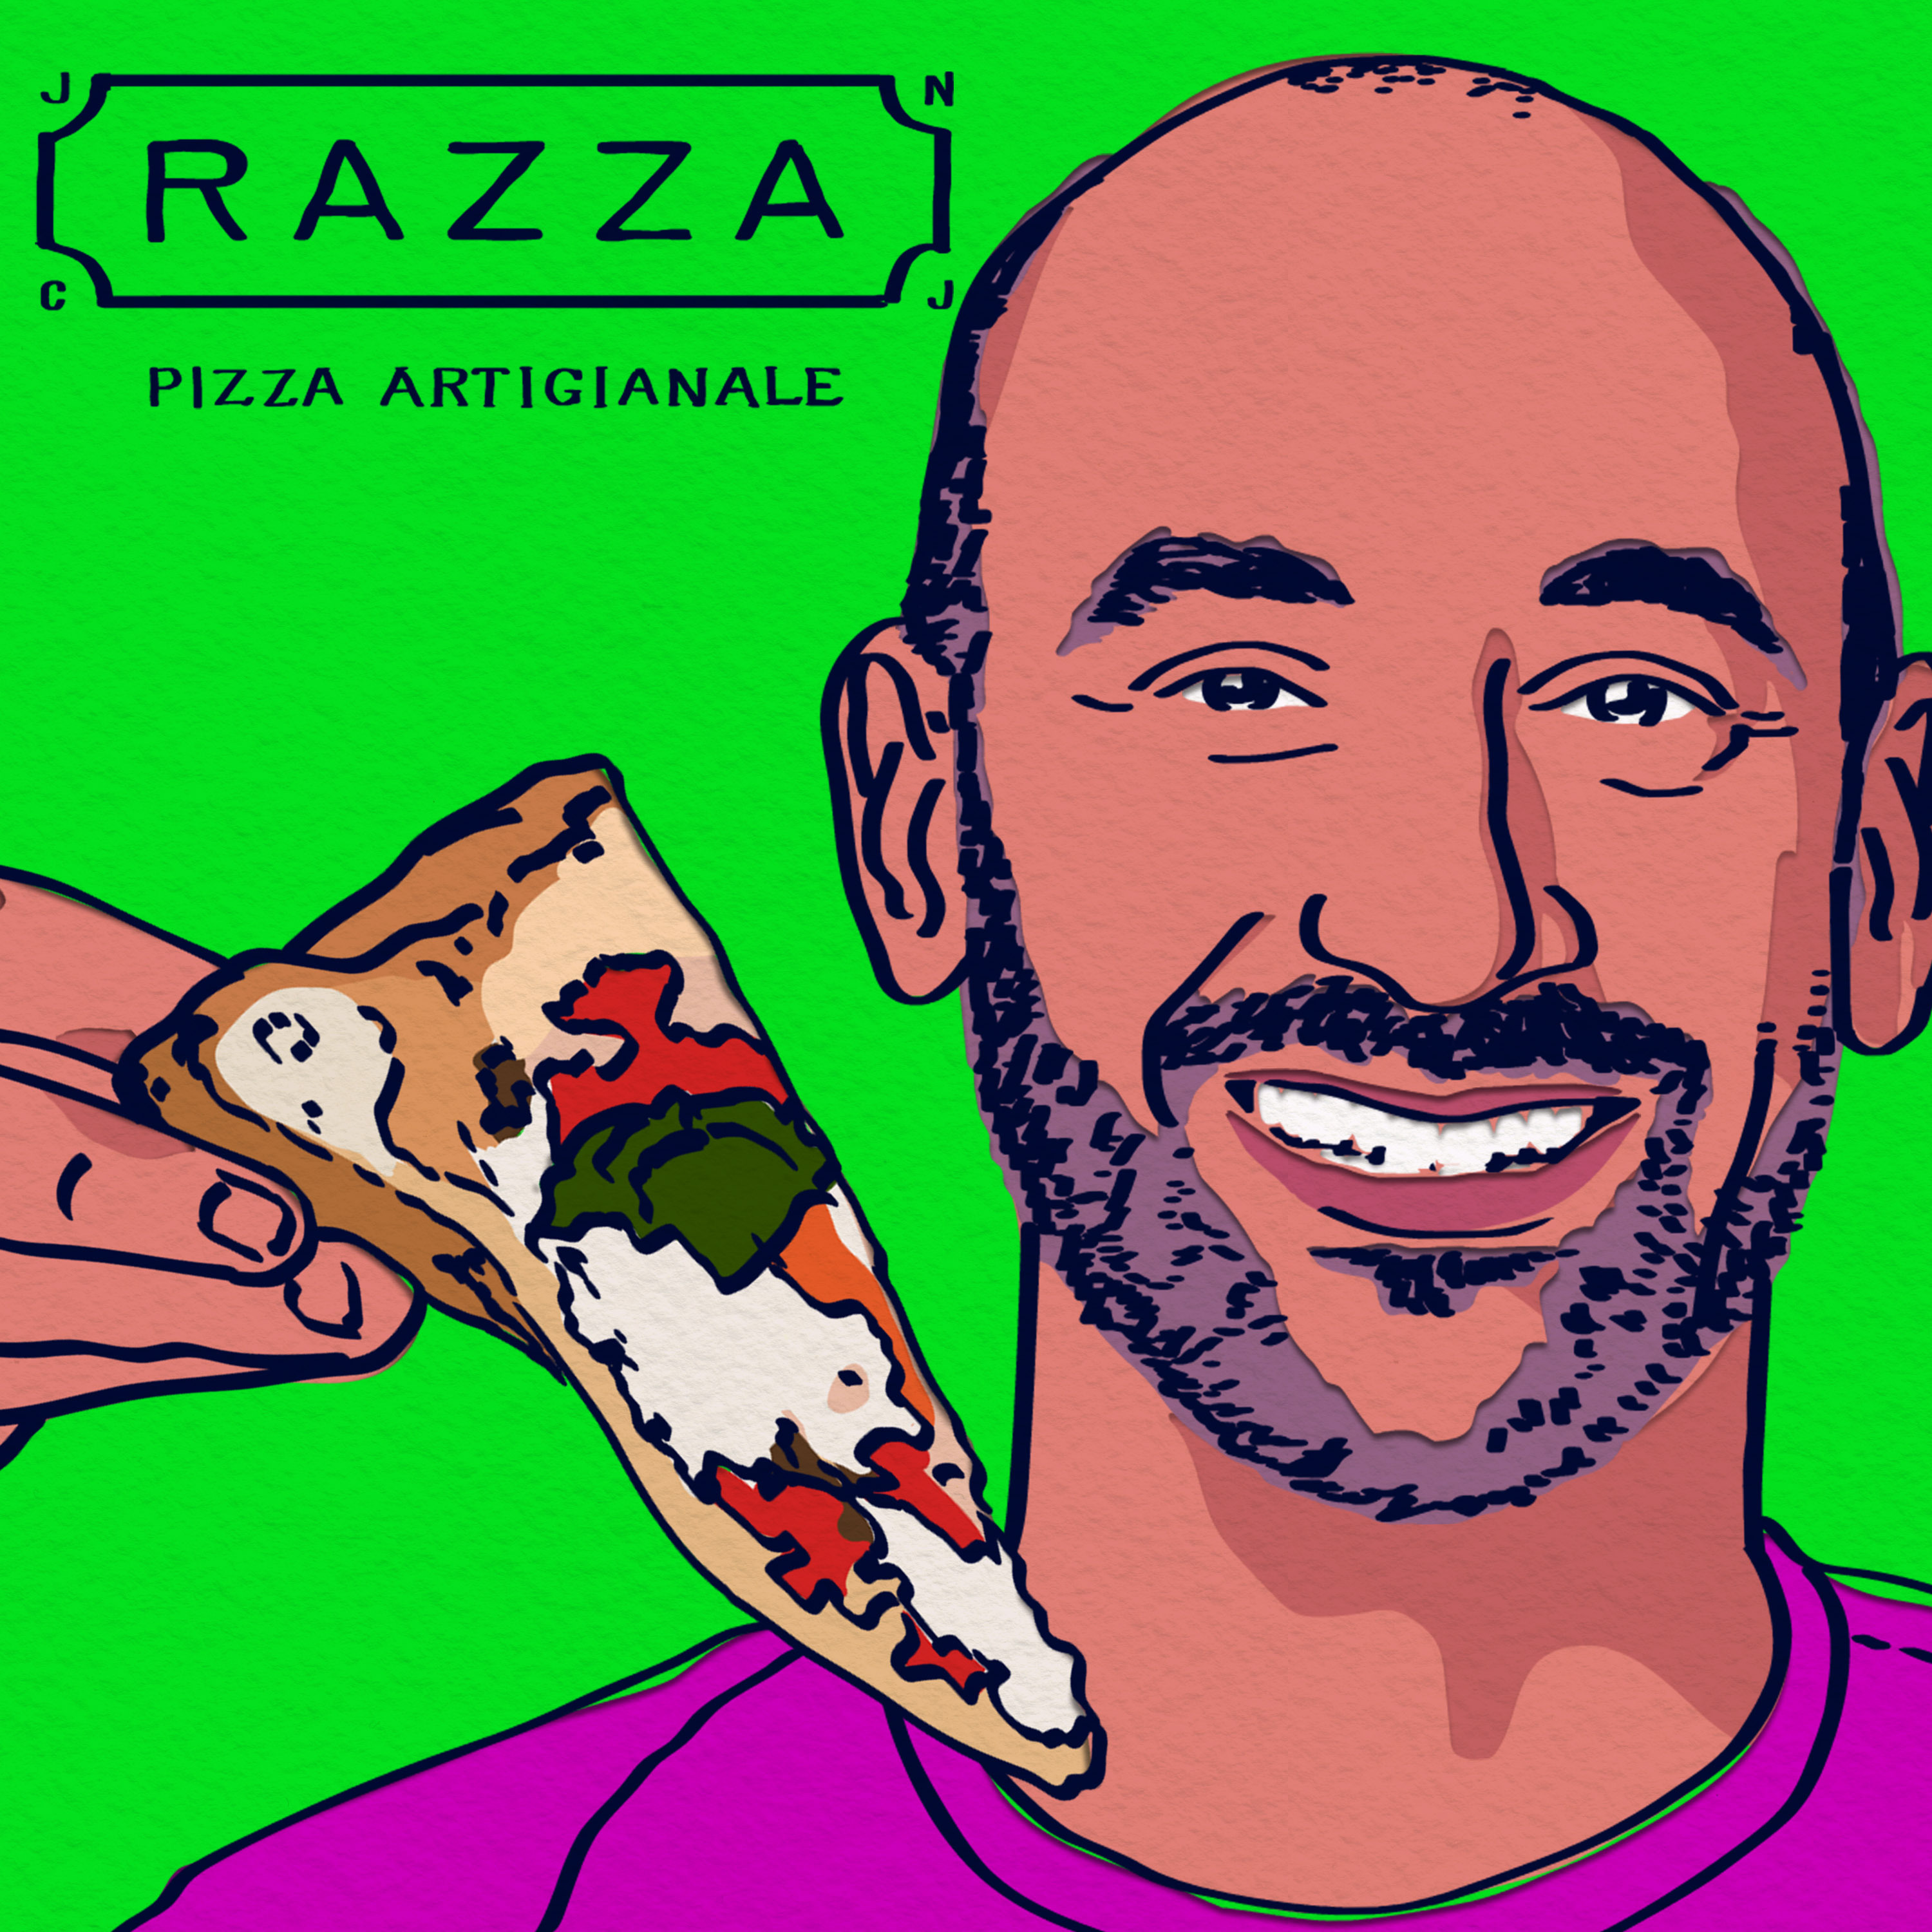 343: Pizza Week with Dan Richer of Razza